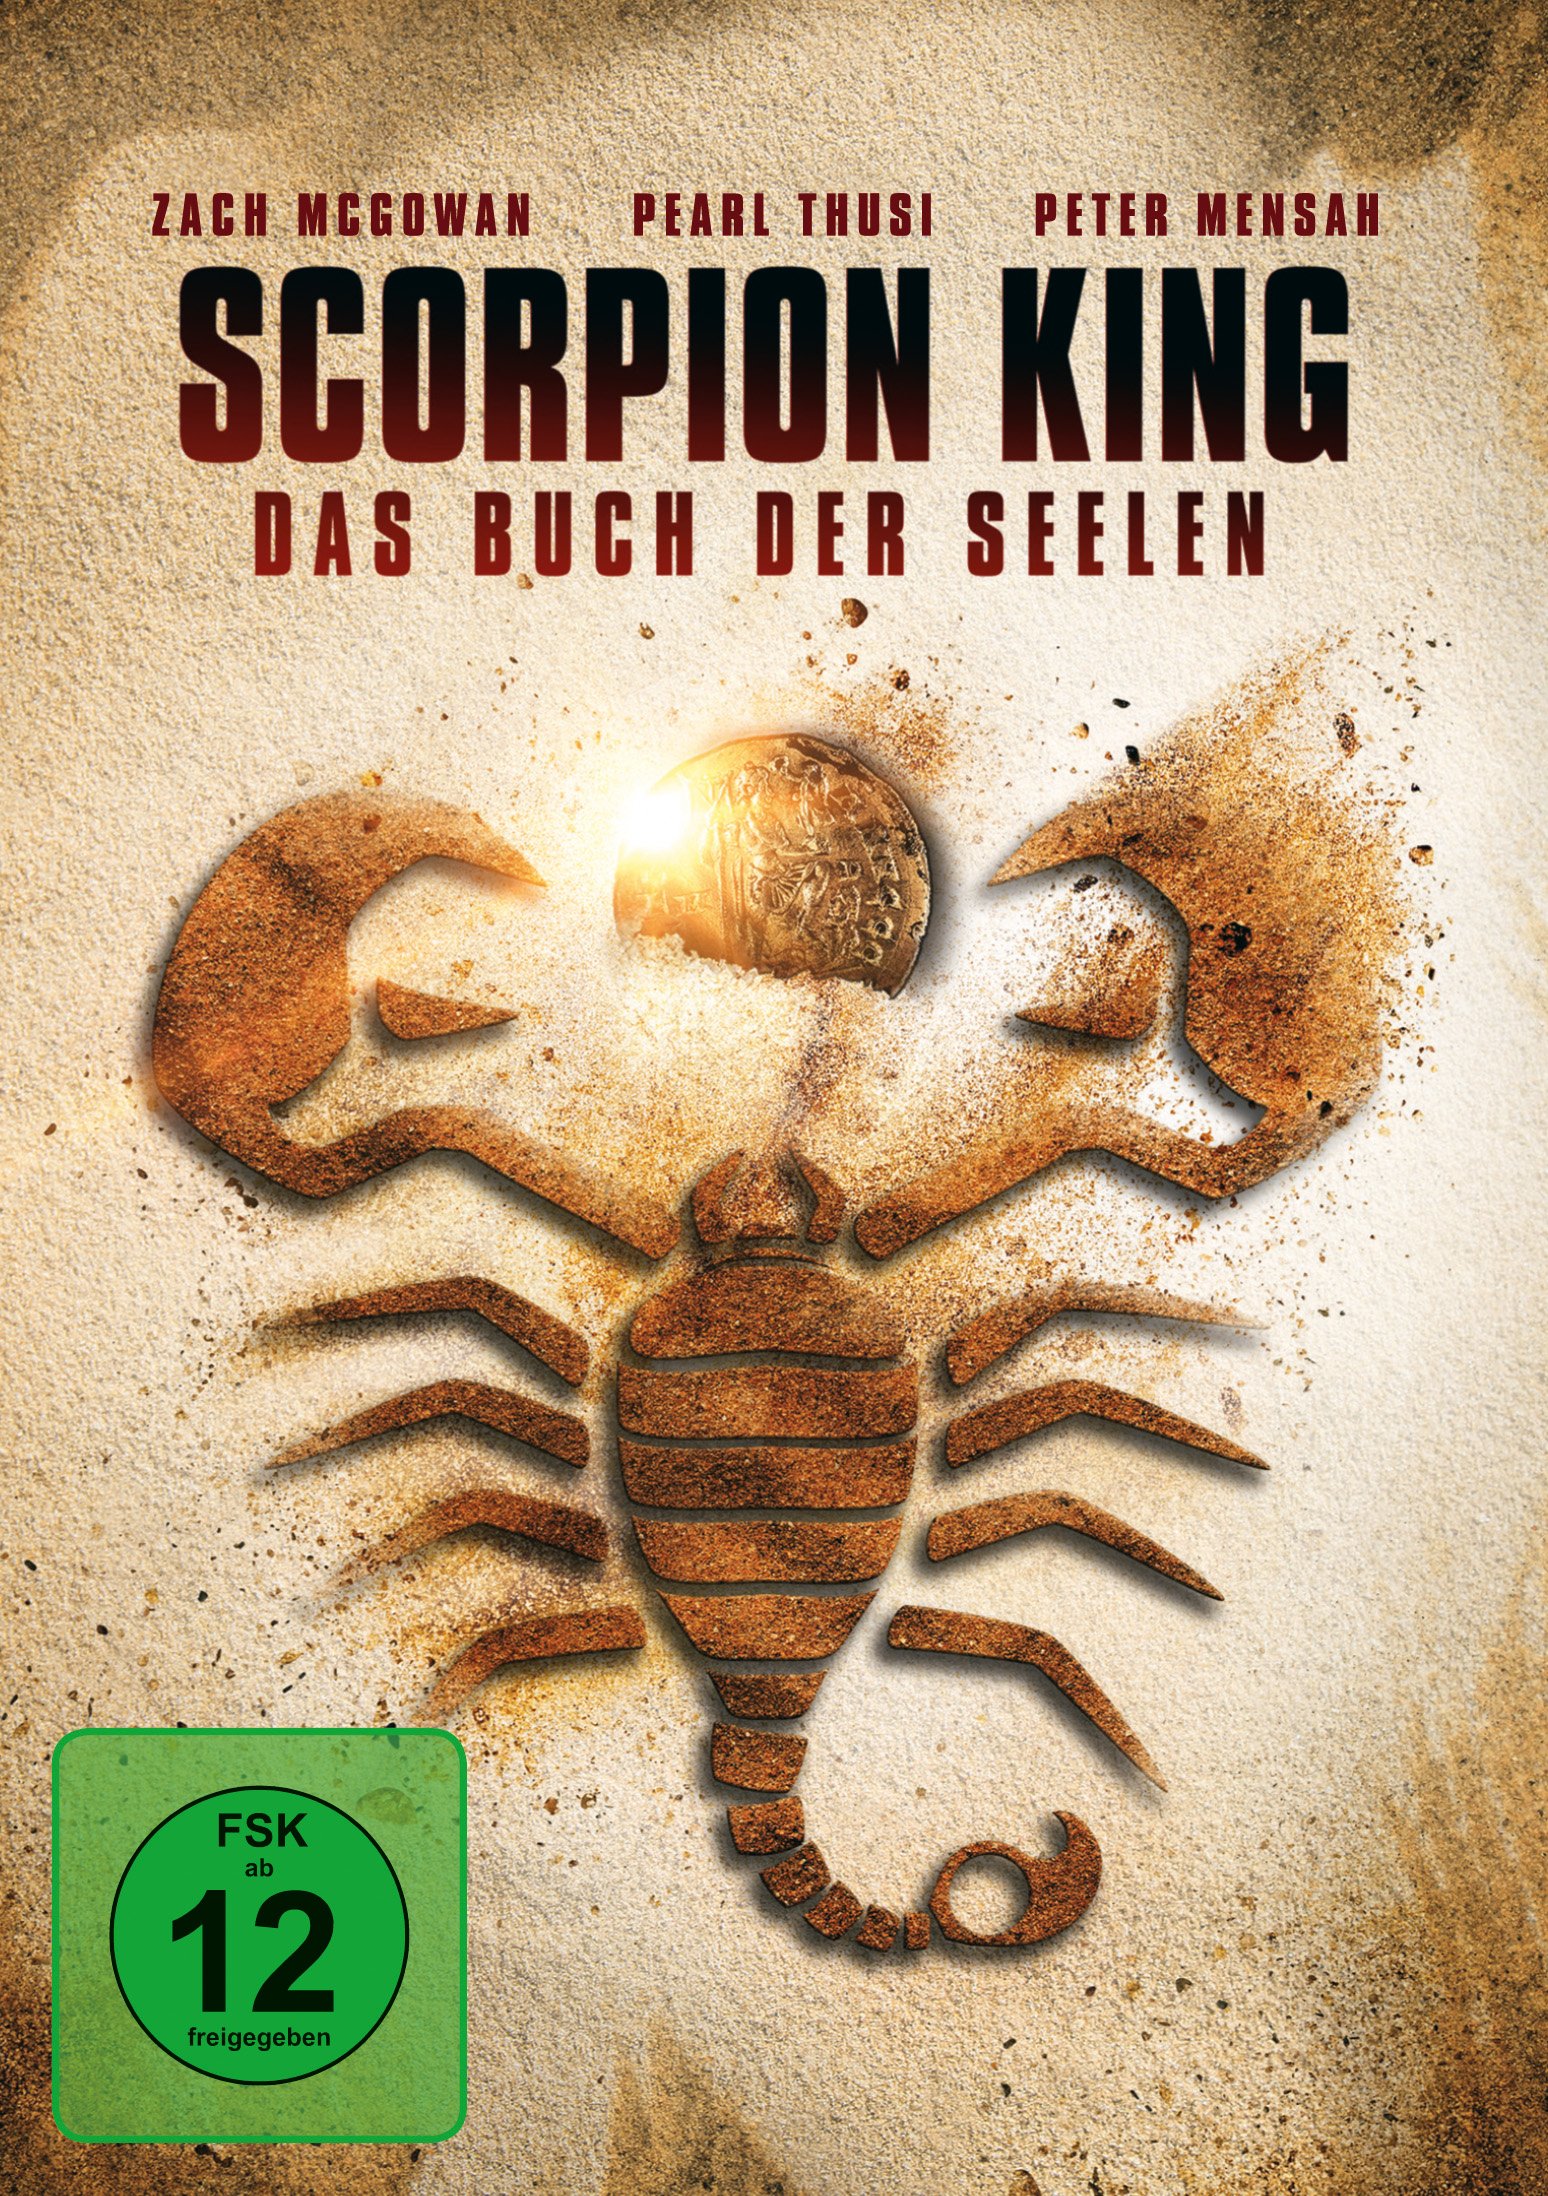 The Scorpion King 5 Das Buch Der Seelen Film 2018 Filmstarts De